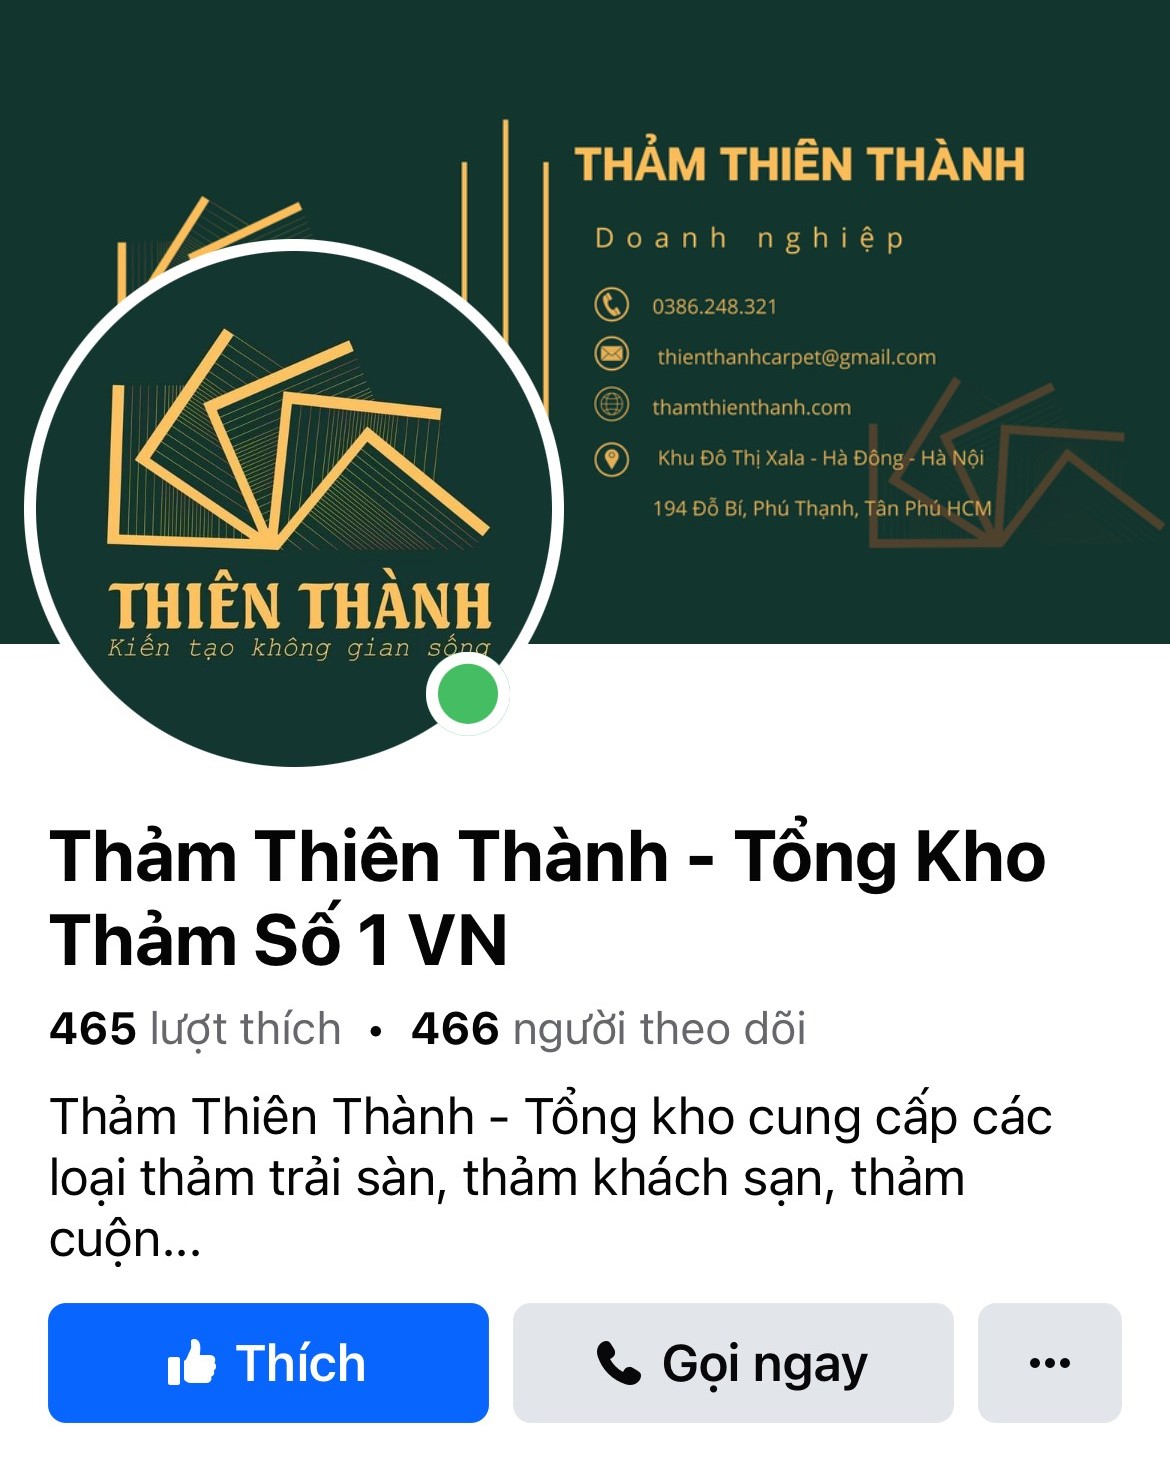 https://www.facebook.com/tongkhothamthienthanh/